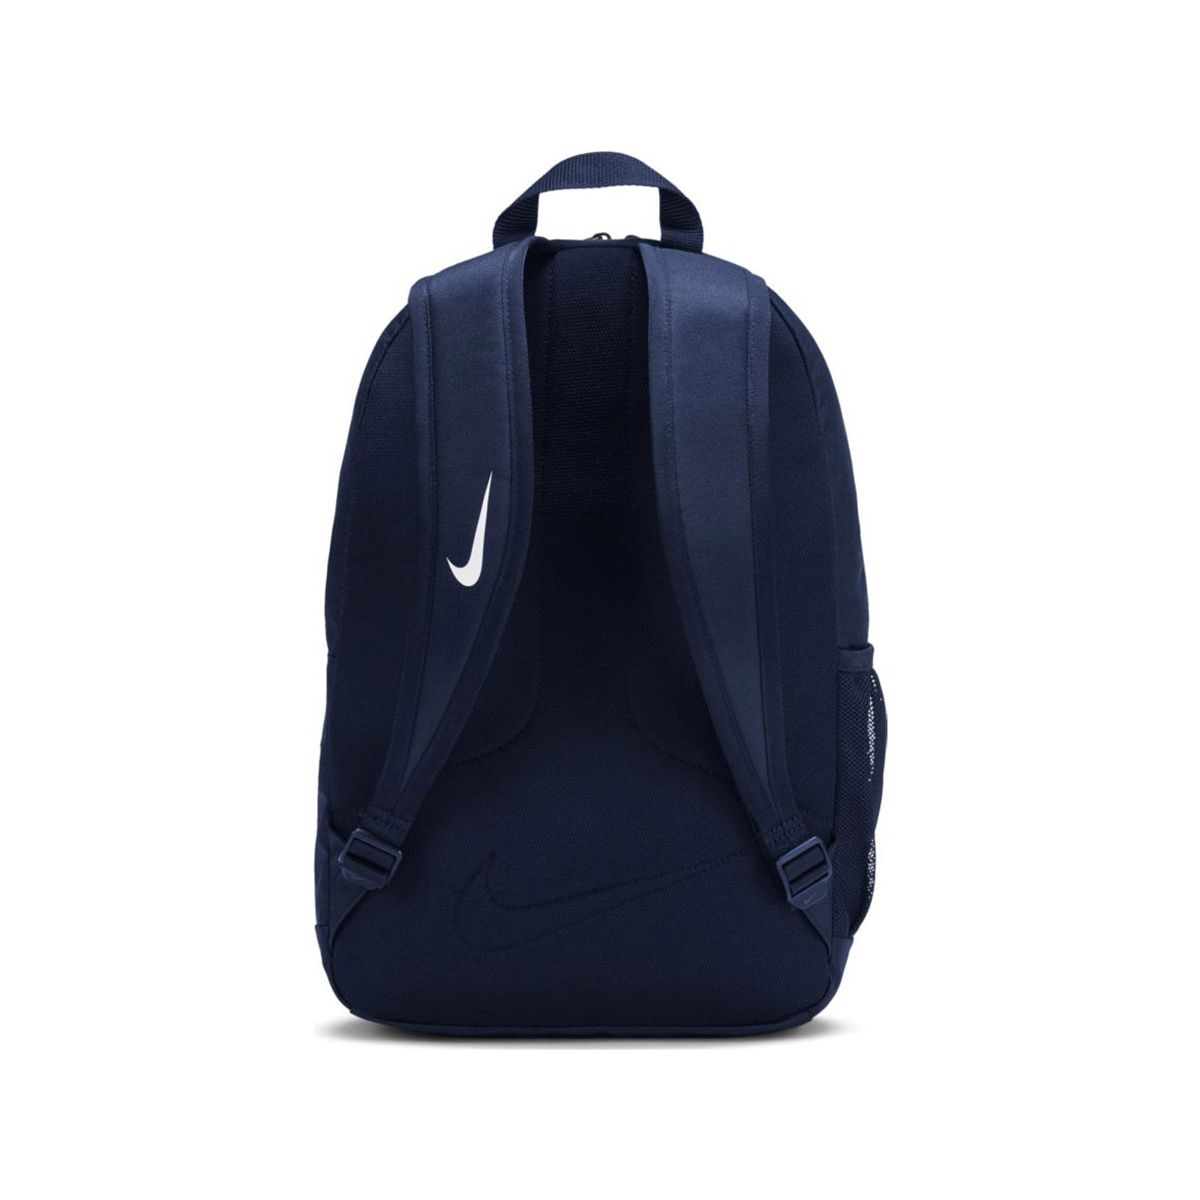 Plecak Nike ACADEMY TEAM granatowy (DA2571 411)